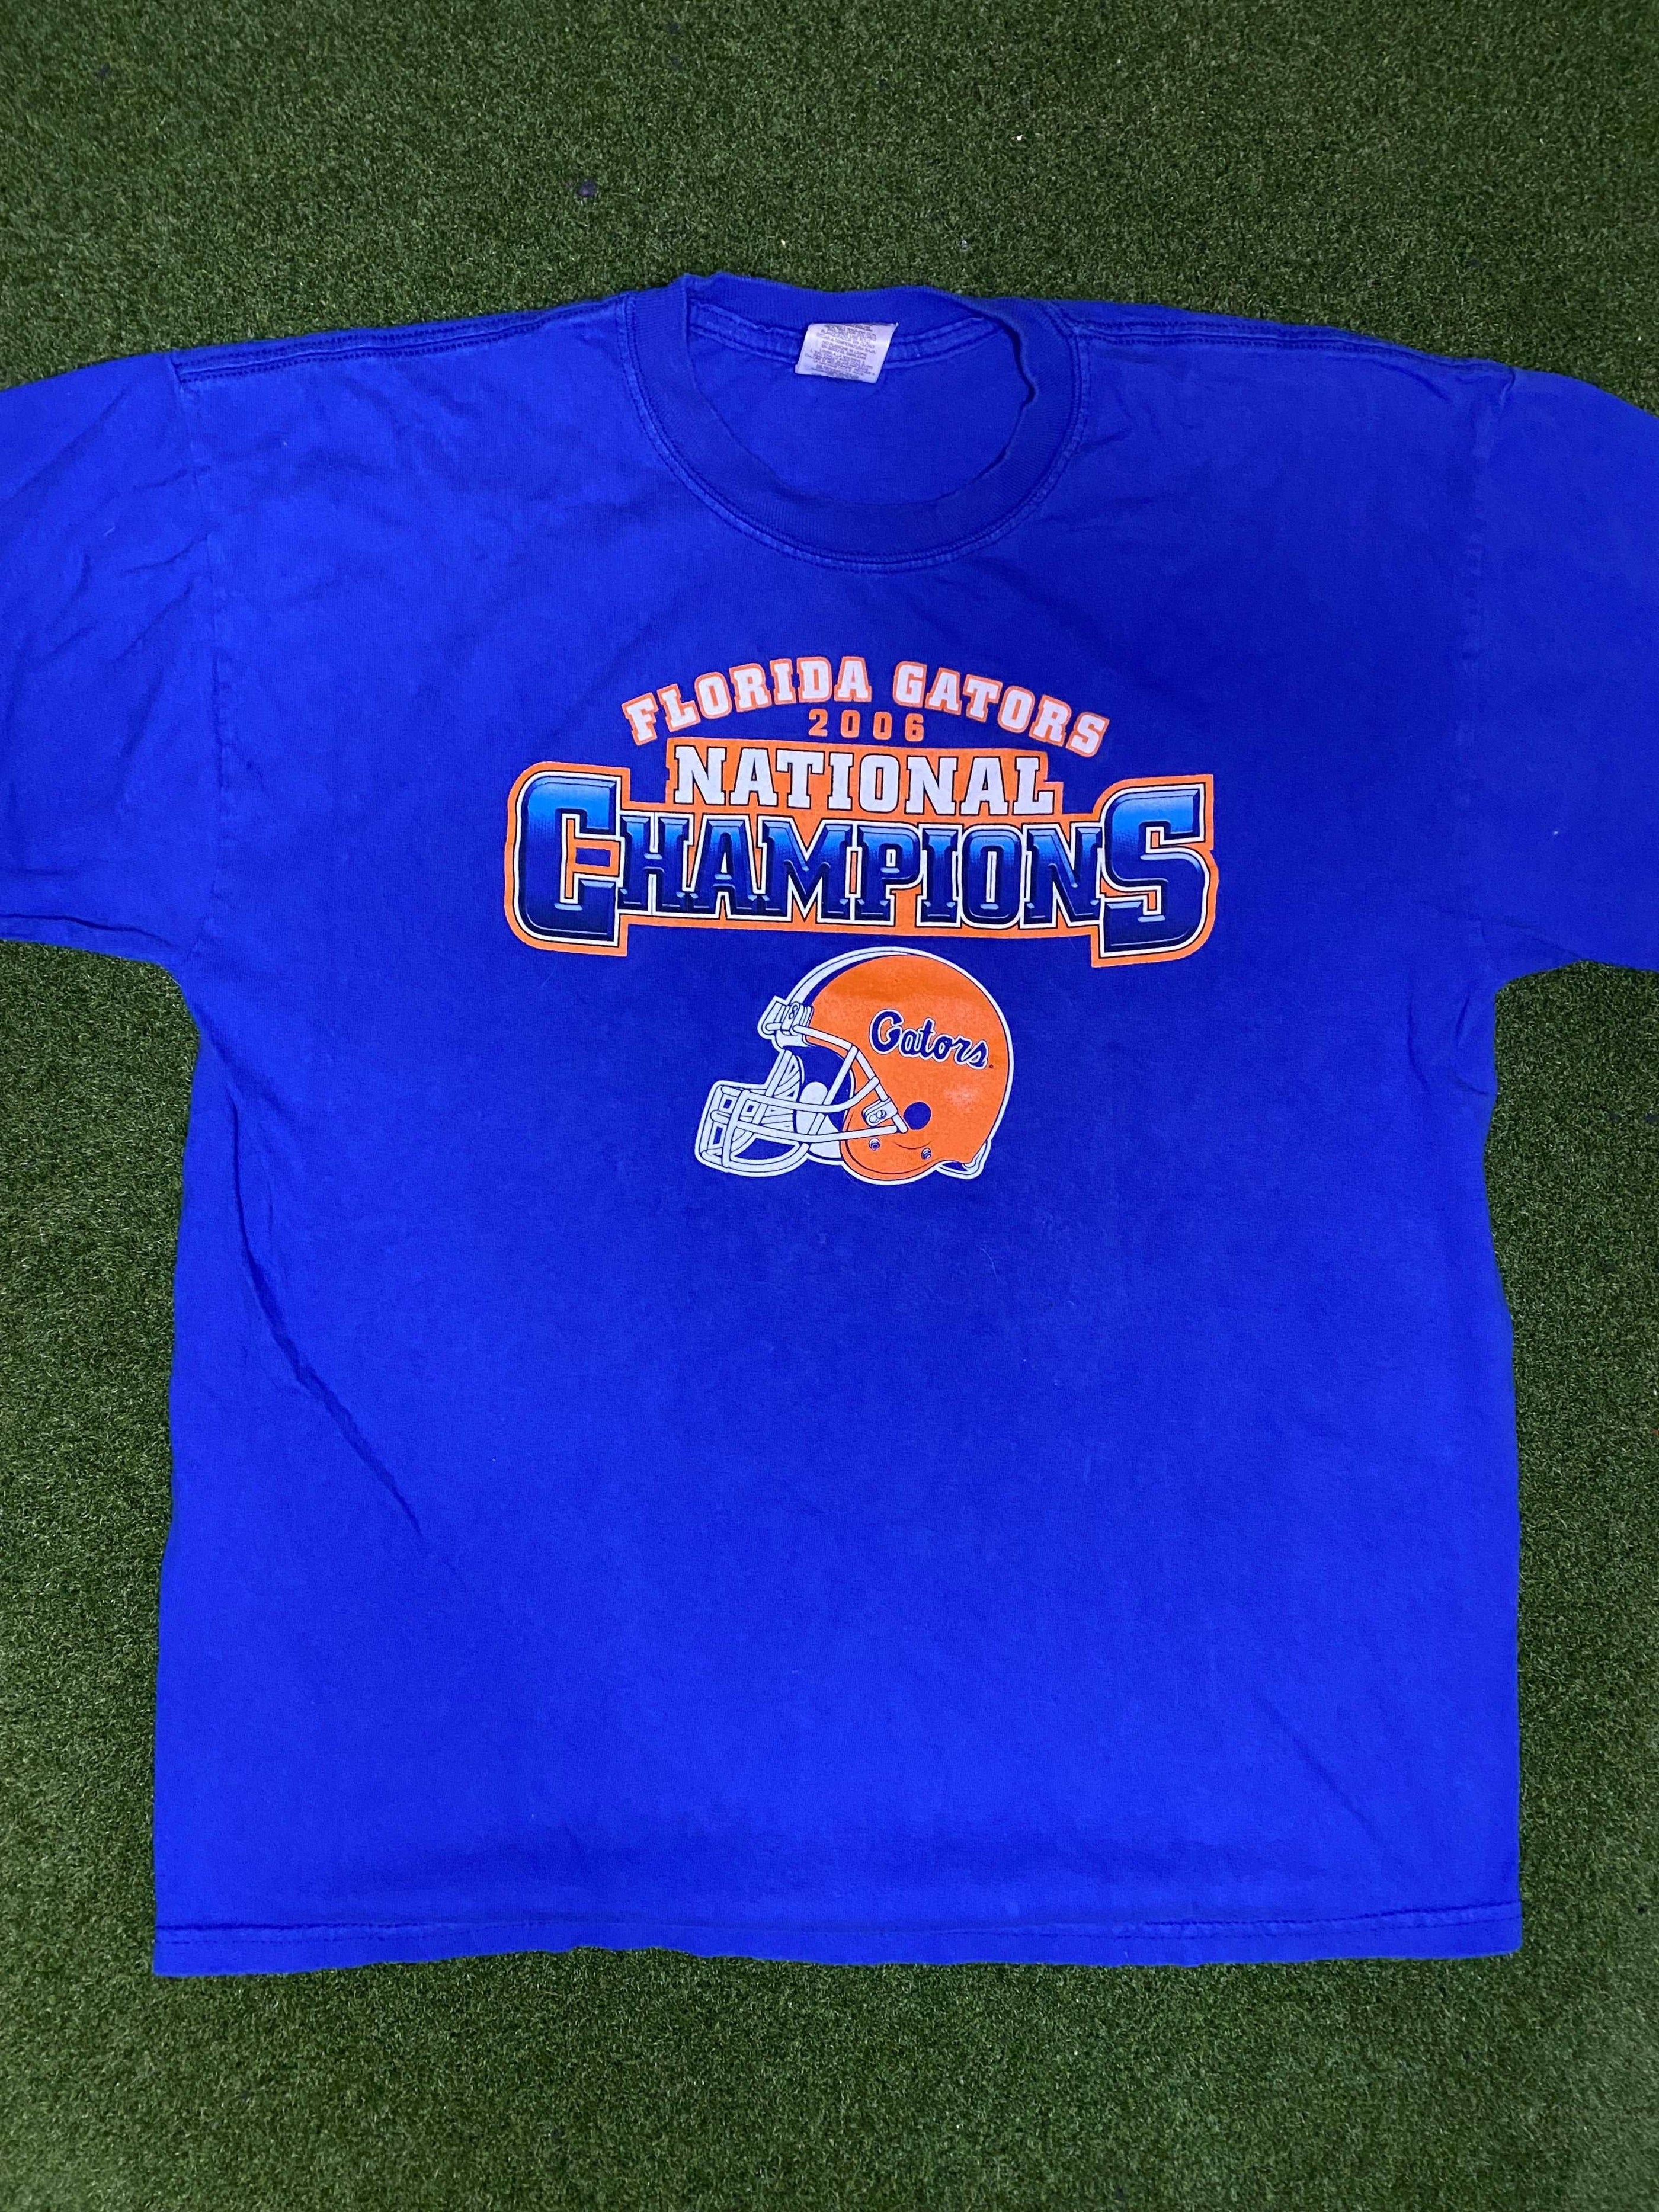 2006 Florida Gators - National Champions - Vintage College Football Te